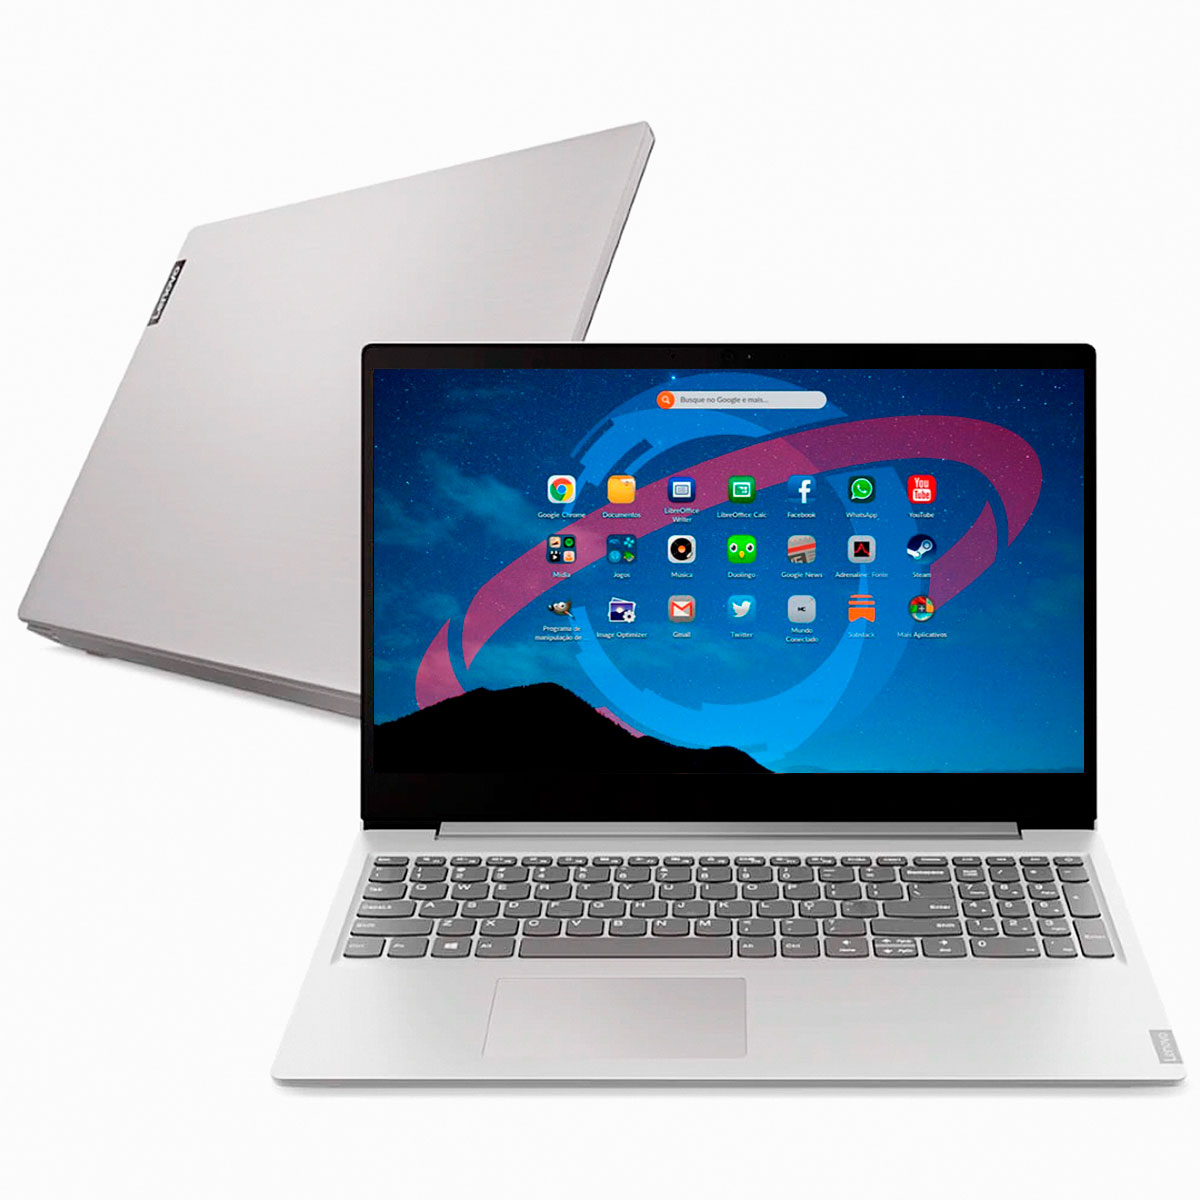 Notebook Lenovo Ideapad S145 - Intel i3 8130U, RAM 8GB, SSD 240GB, Tela 15.6